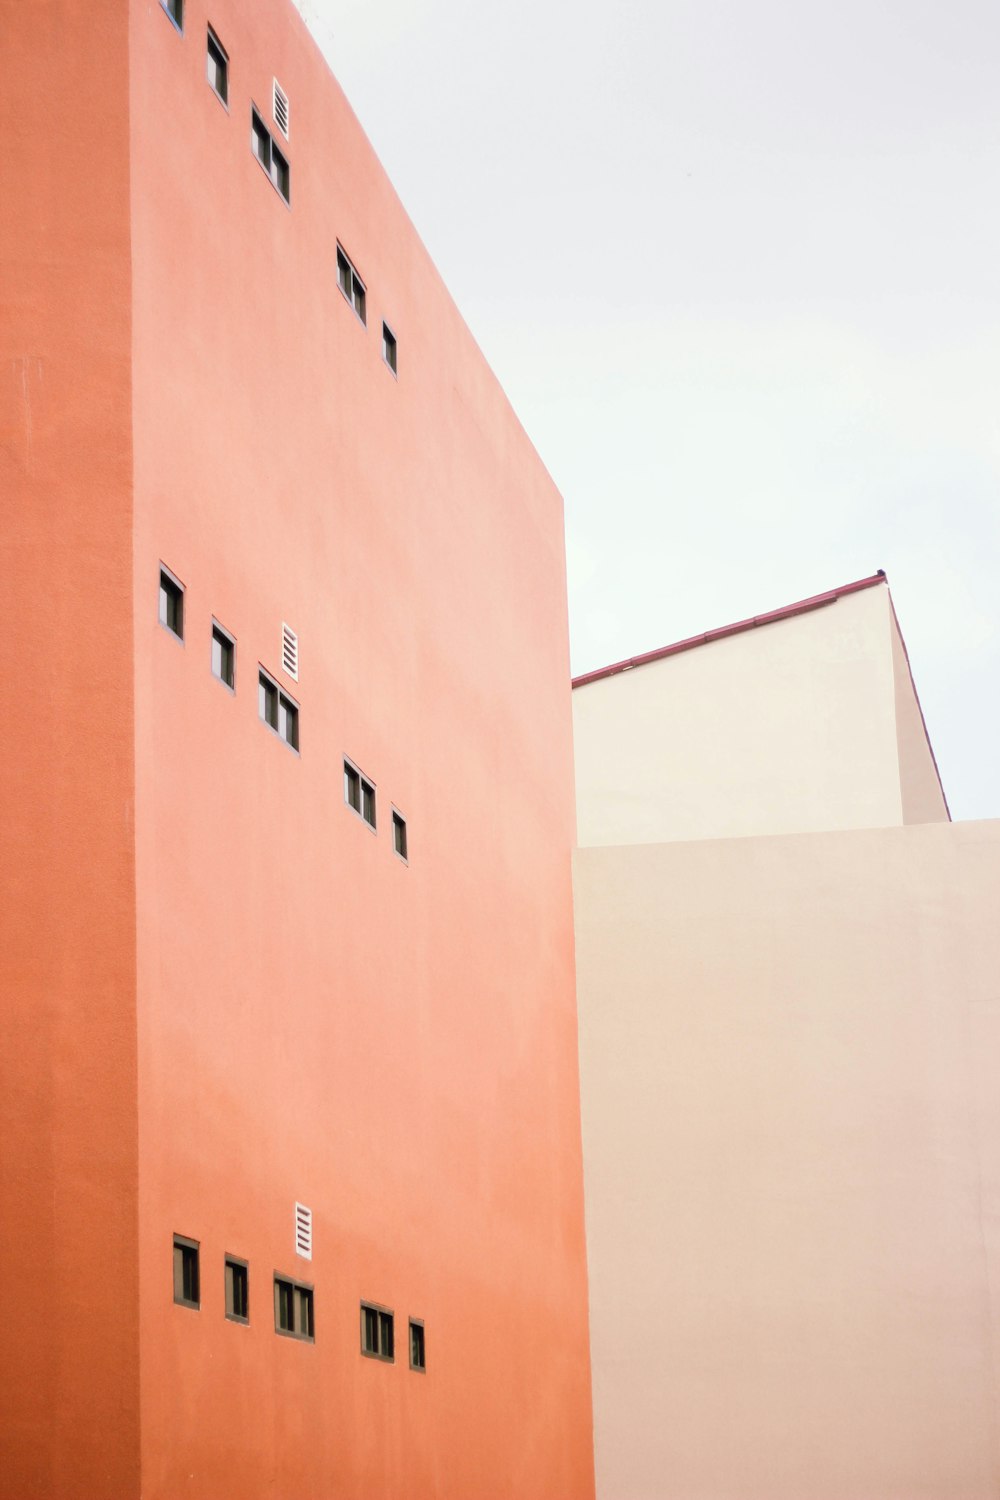 edifício pintado de laranja